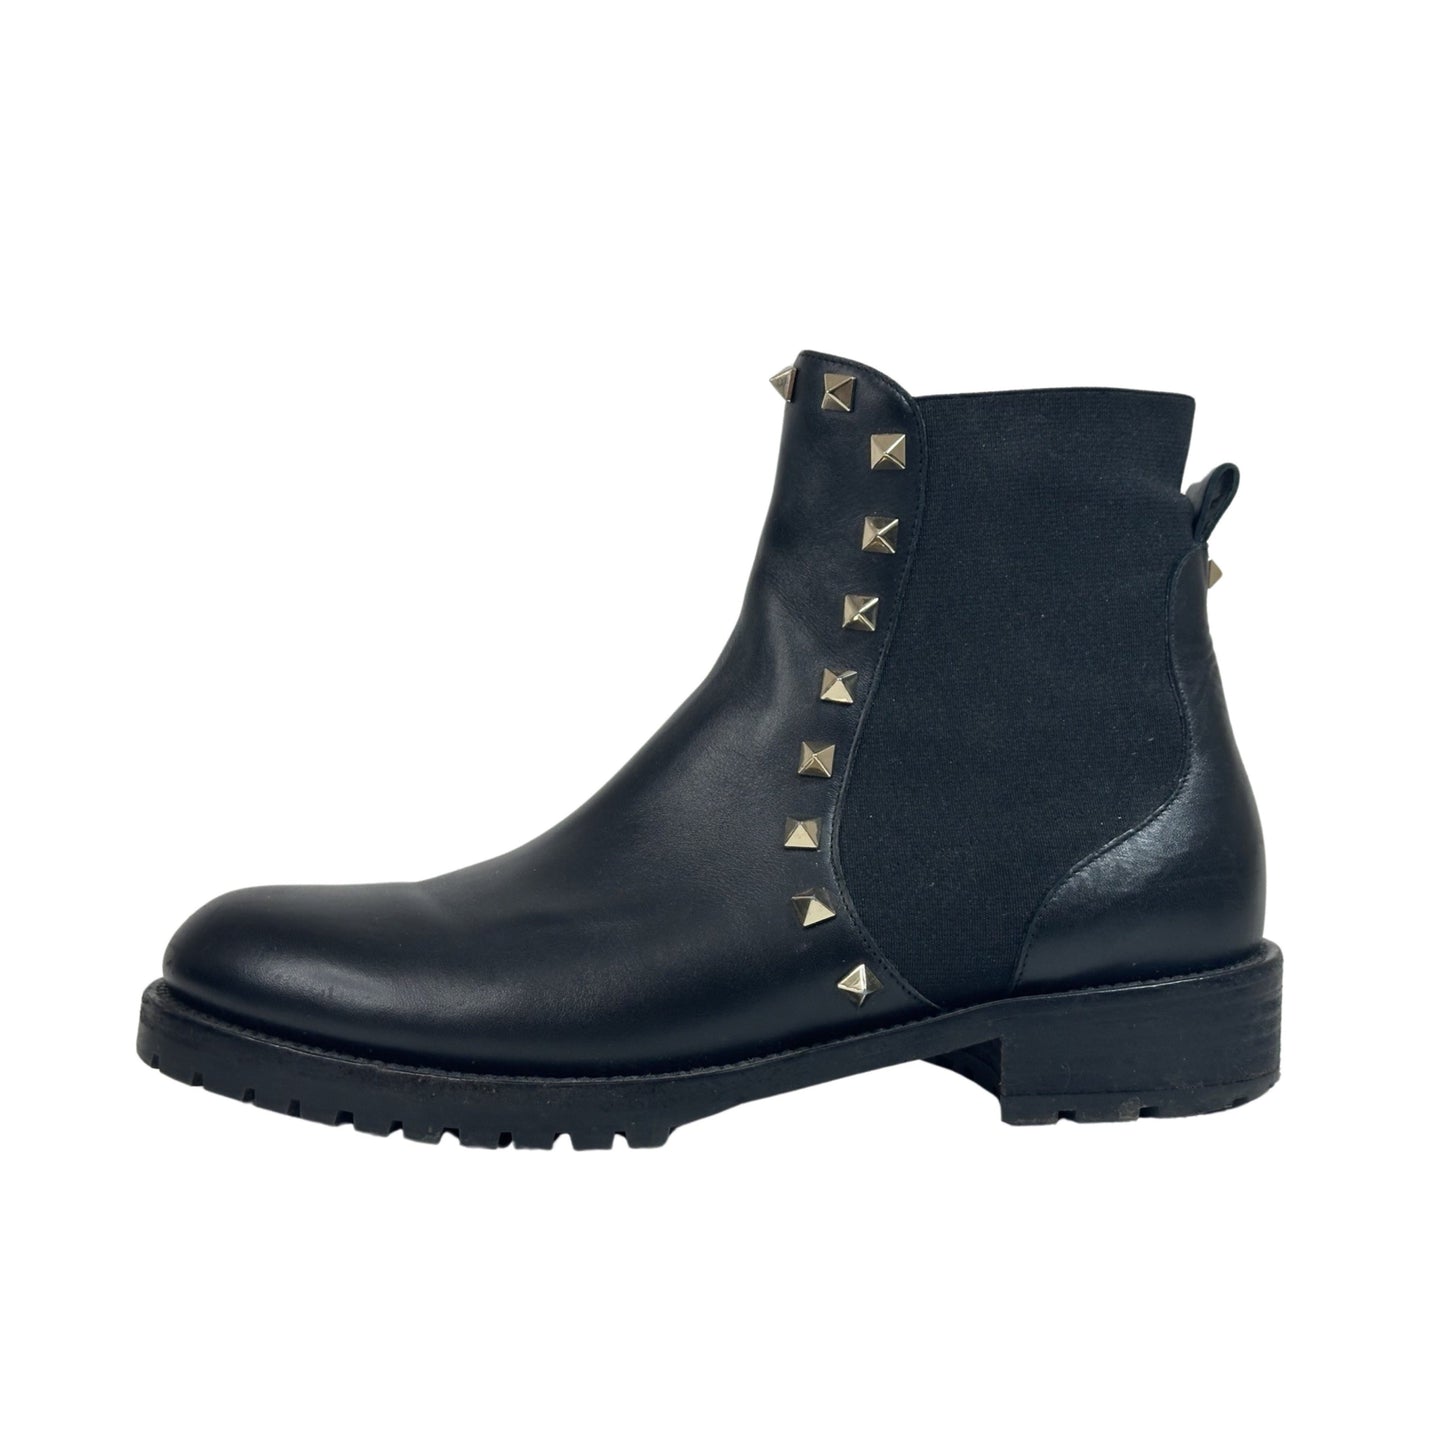 Valentino Rockstud Chelsea Boot - Size 38